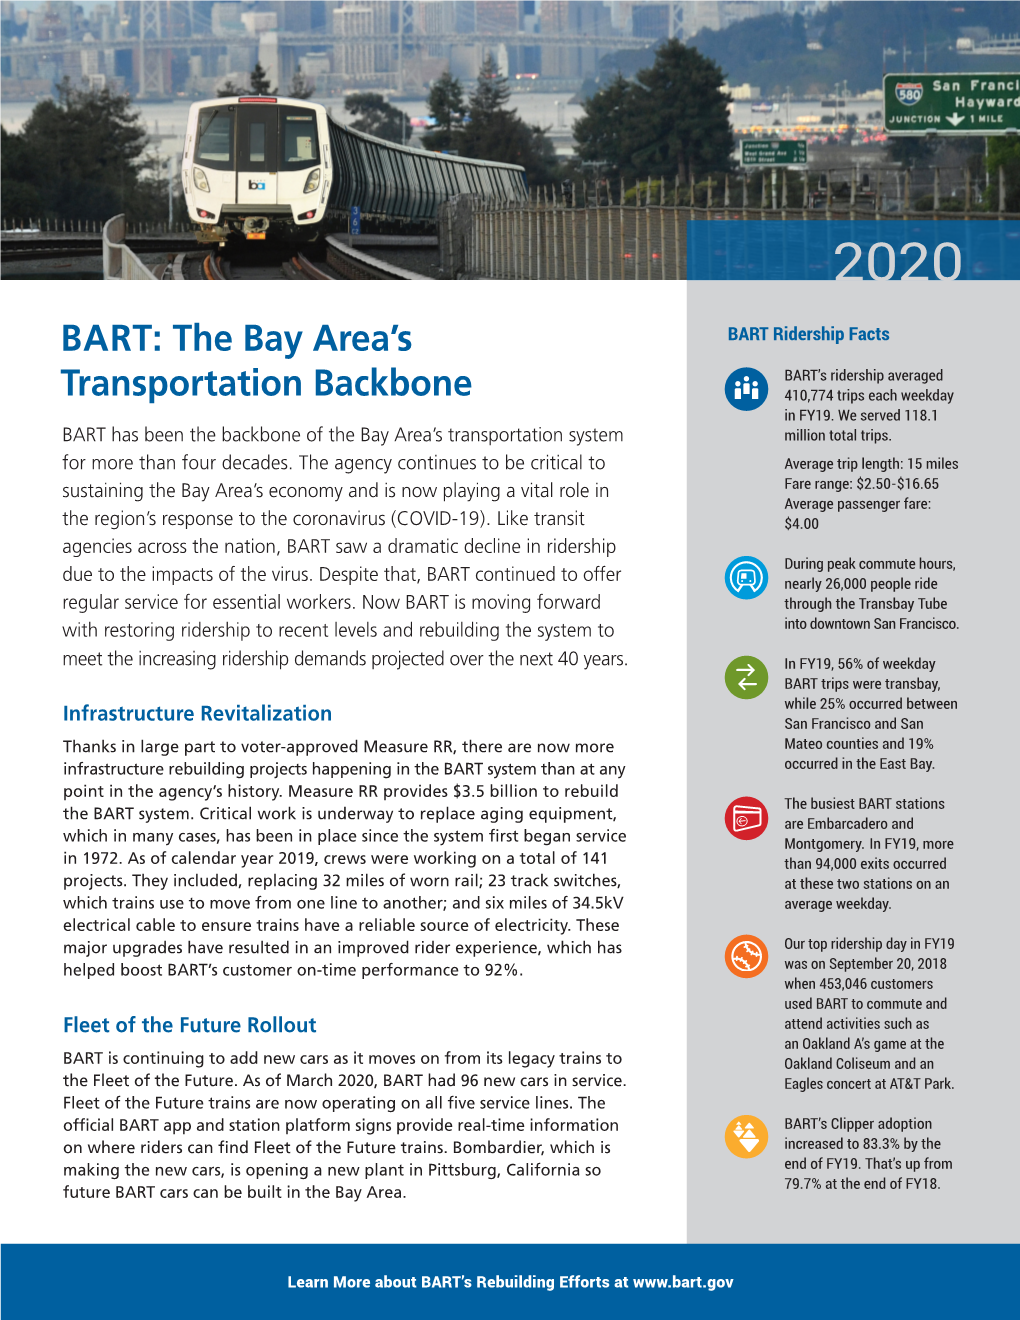 The Bay Area's Transportation Backbone